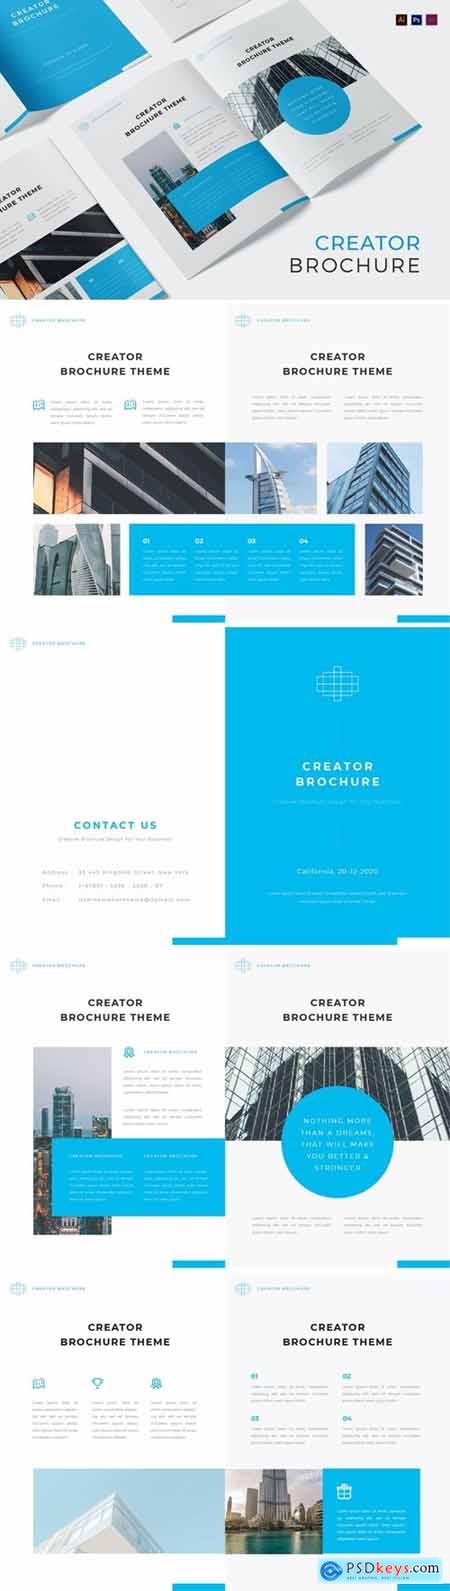 Creator Theme Brochure